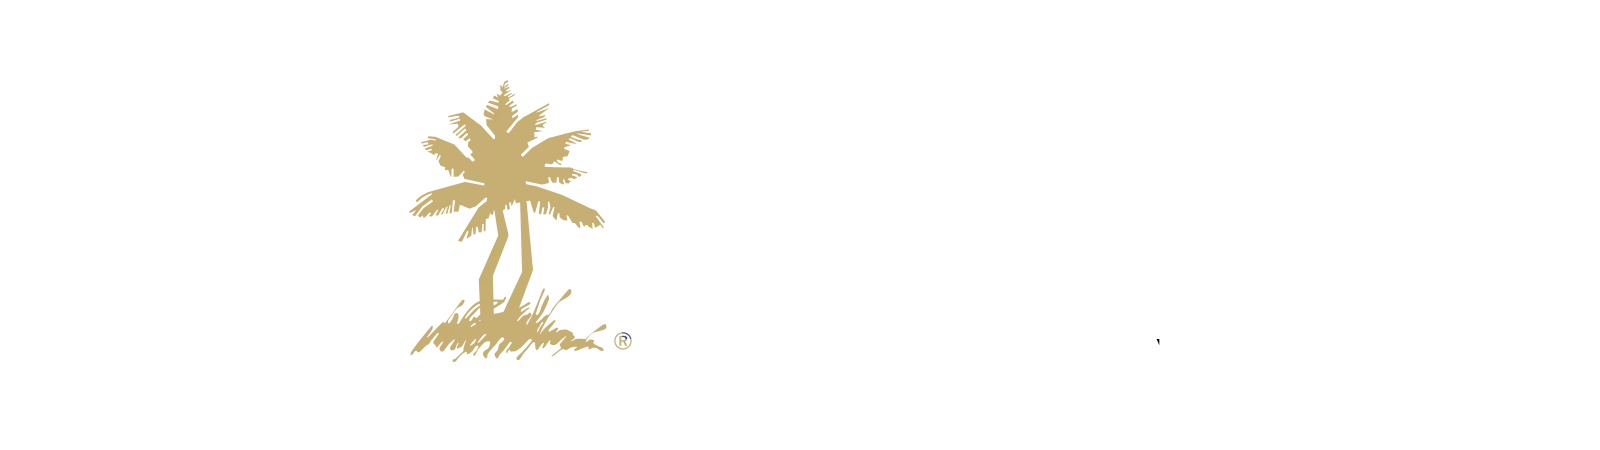 Turtle Beach Korea's Web Design Agency - ADDVALUN